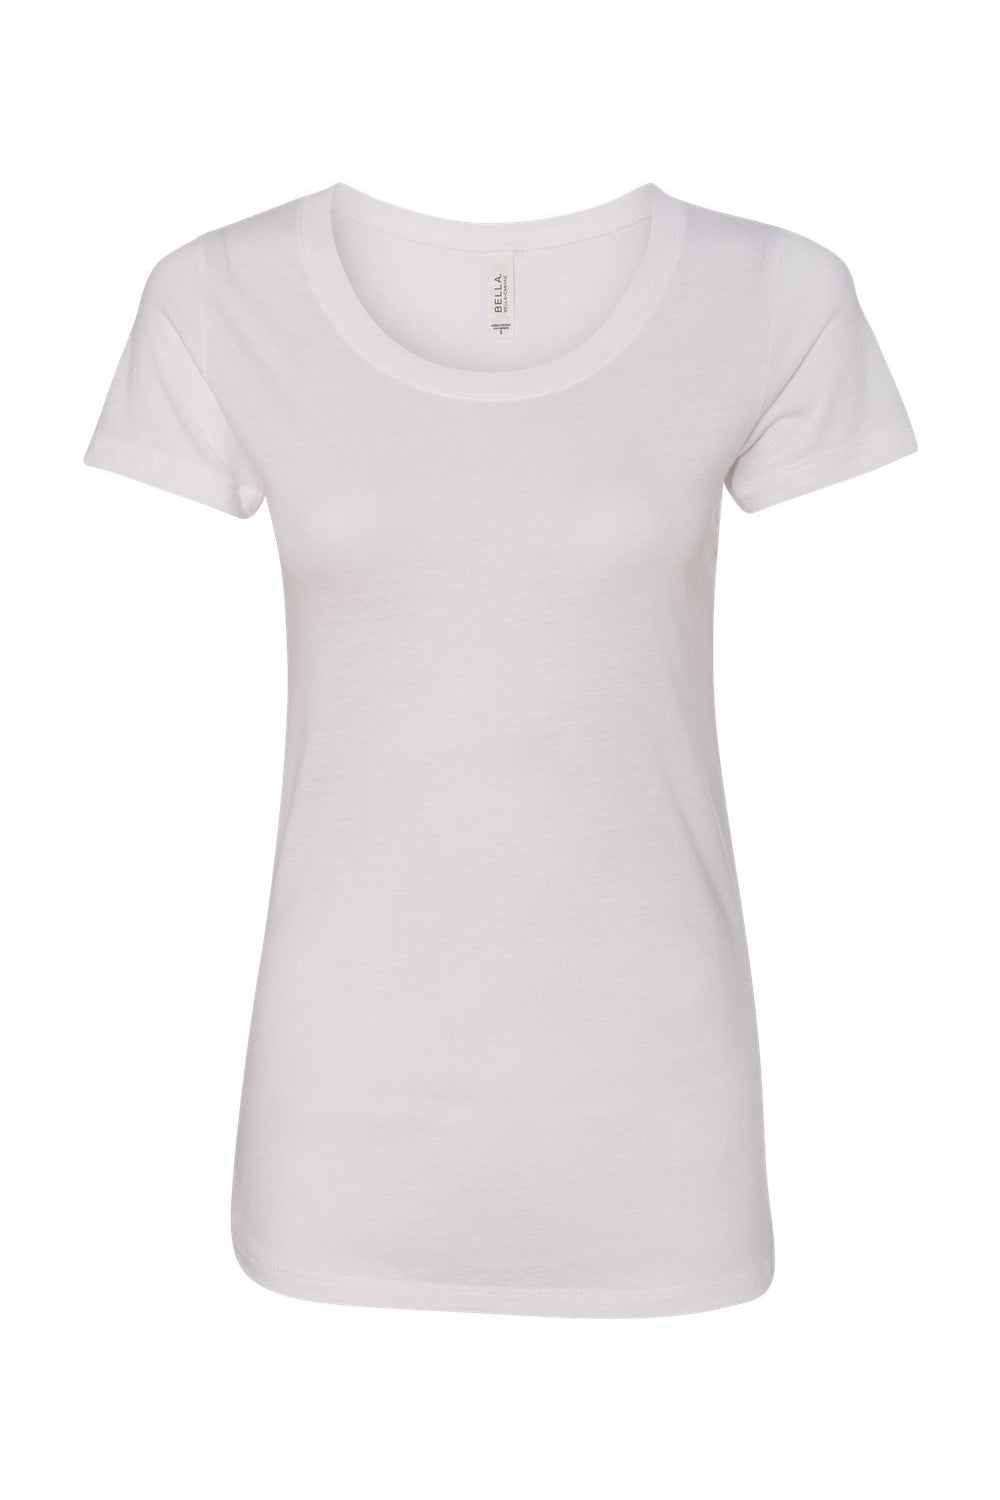 Bella + Canvas BC8413/B8413/8413 Womens Short Sleeve Crewneck T-Shirt Solid White Flat Front